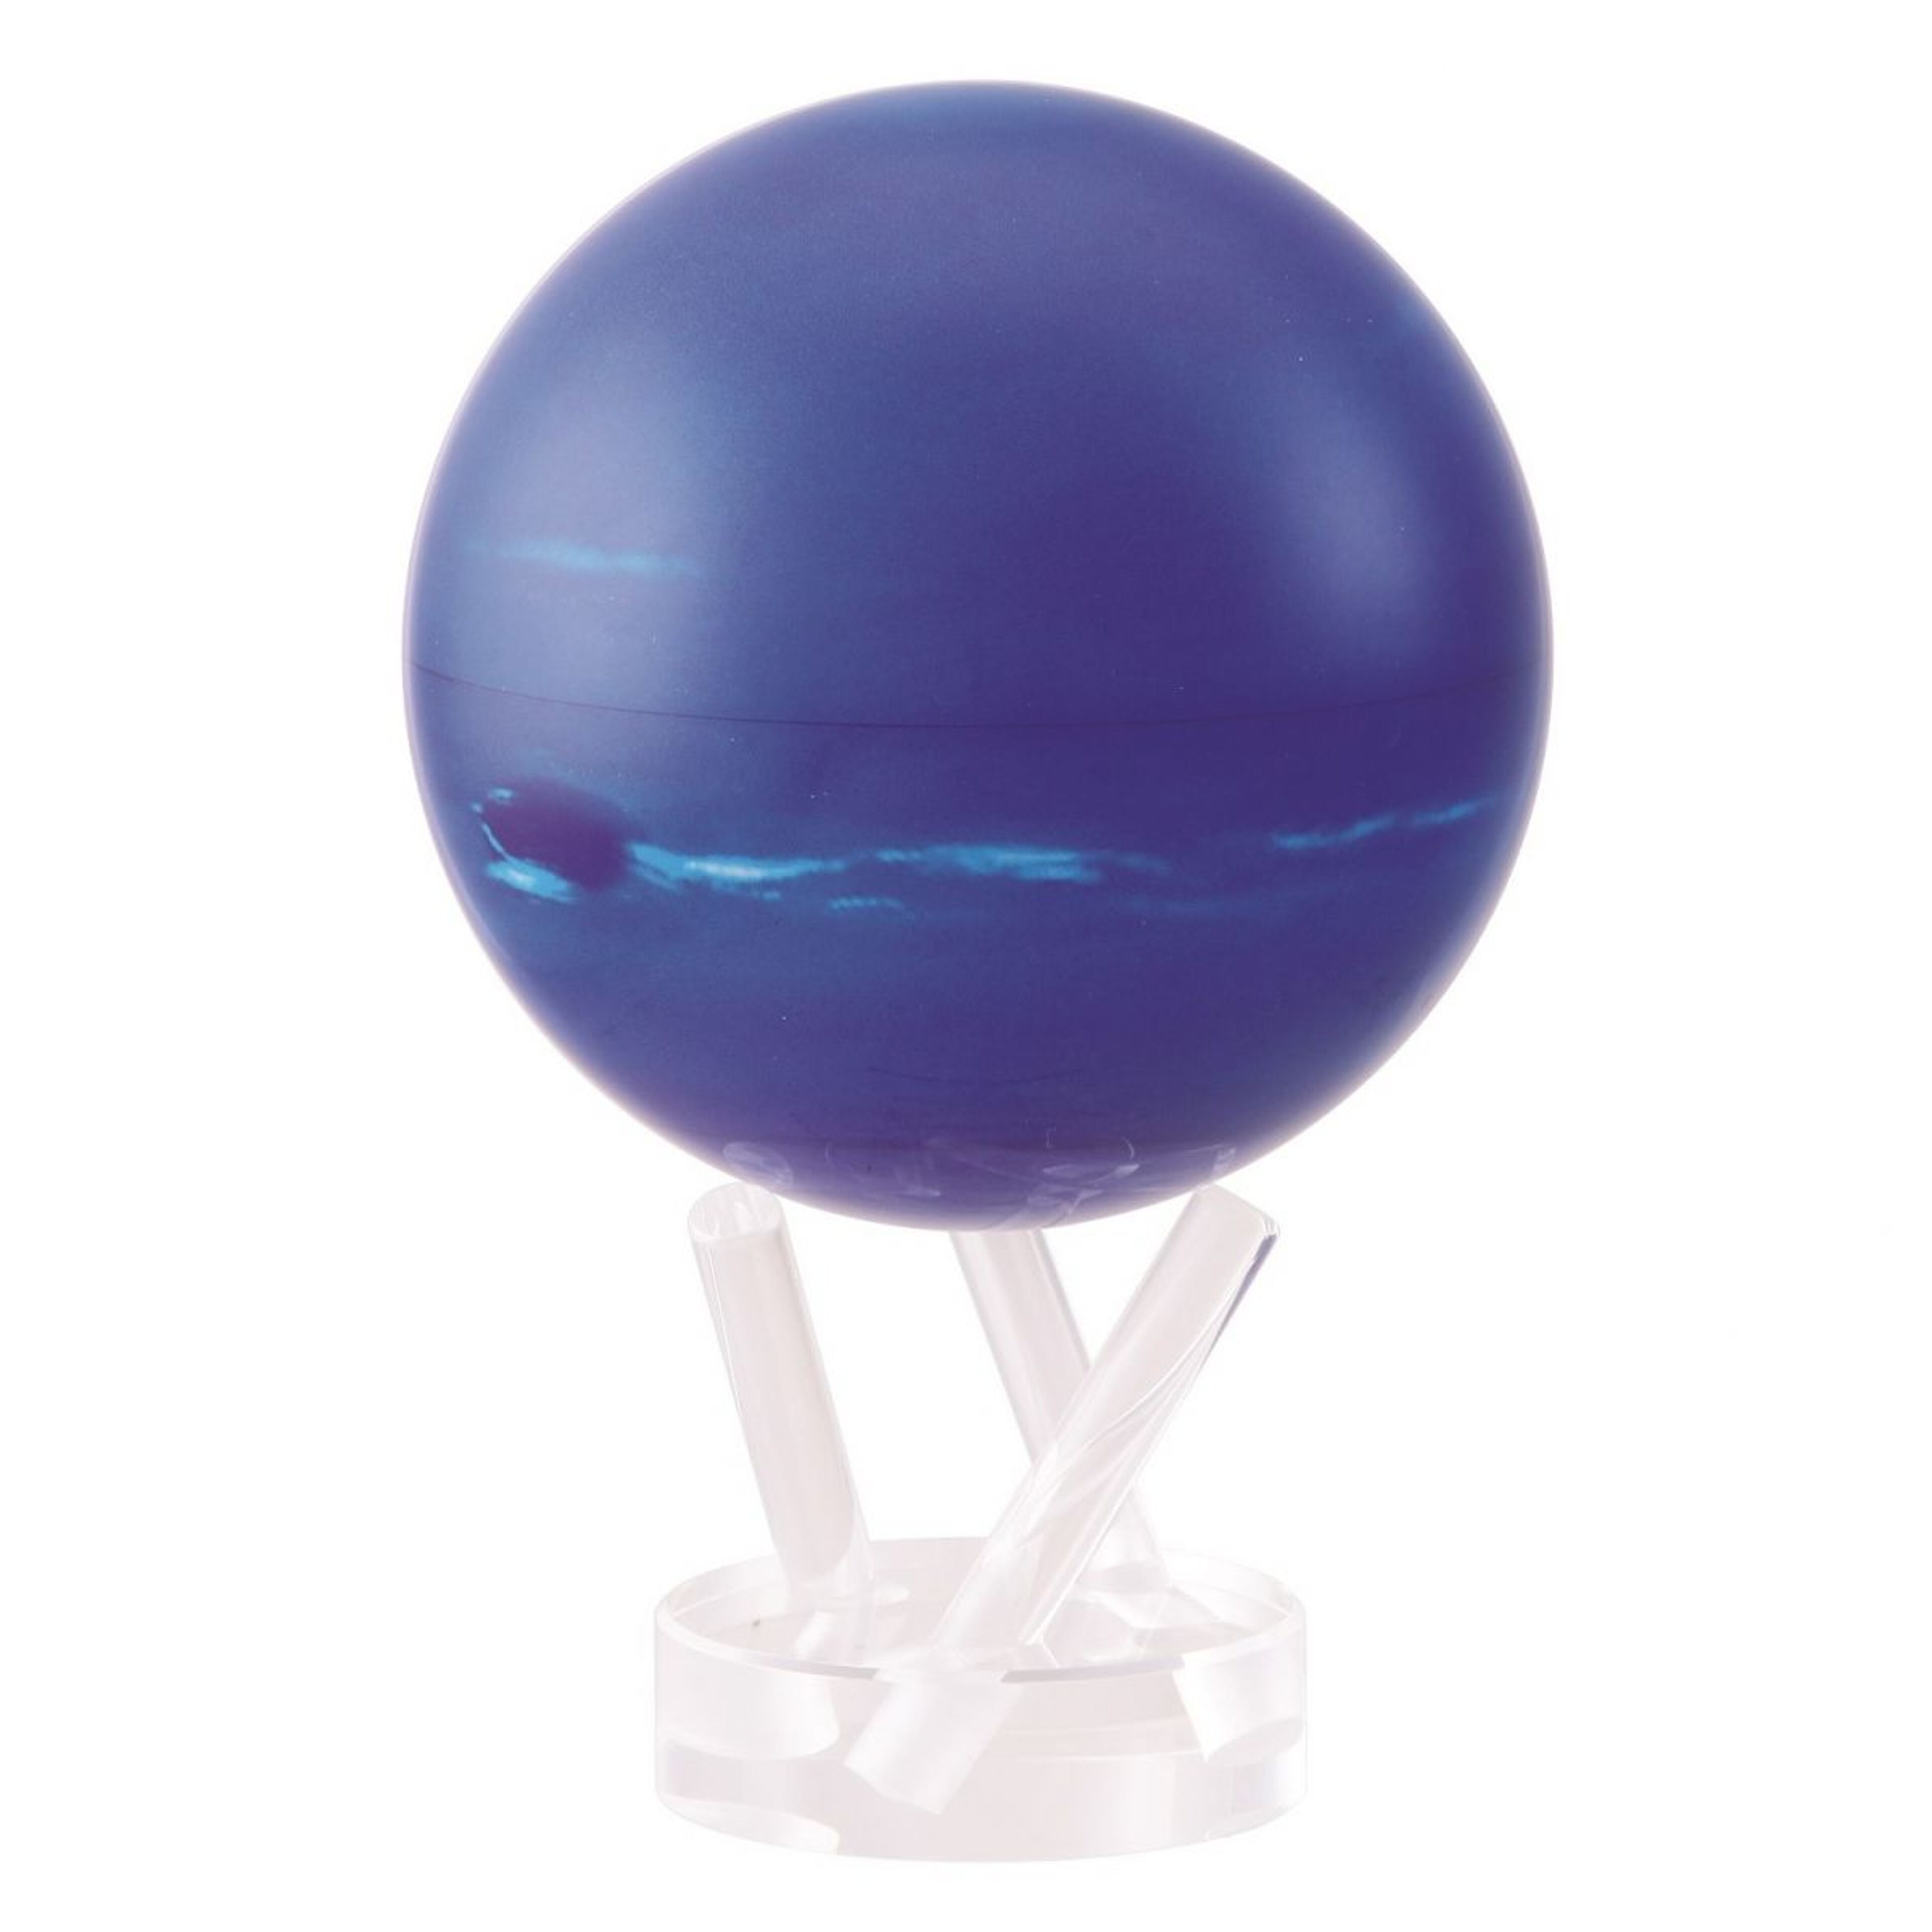 MOVA Neptune self-rotating globe